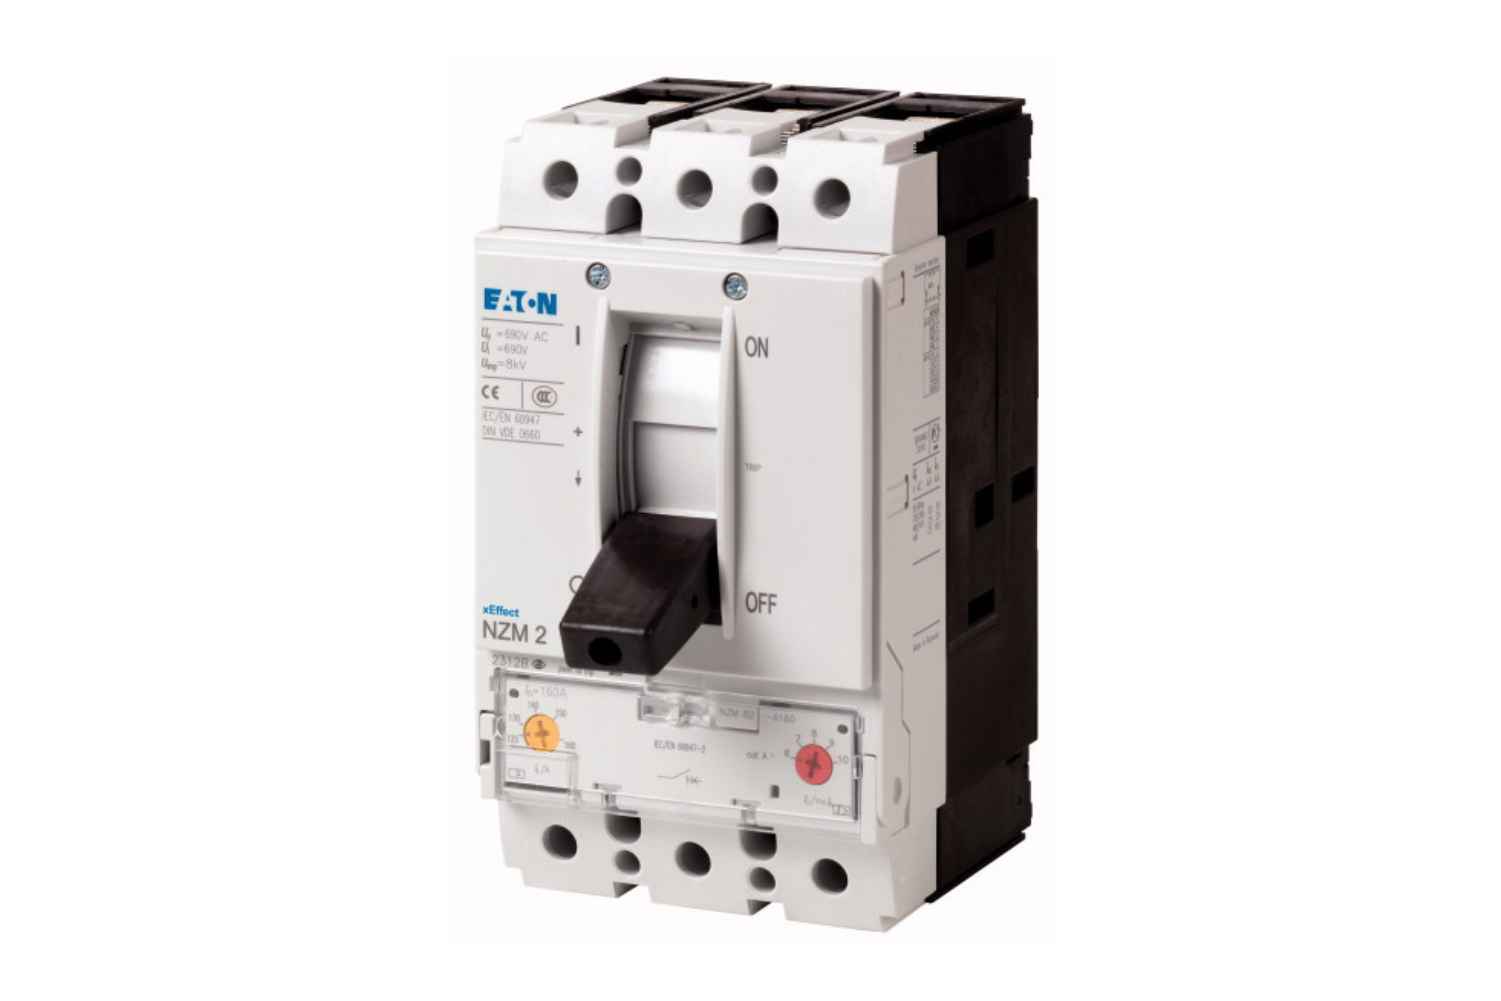 Автоматический выключатель Eaton LZMC 2-A 160-1. Автоматический выключатель lzmc2-а200-i, 3p 200a 36ka, Eaton. Moeller LZM 2 автомат выключатель. Автоматический выключатель 250 а 4p.